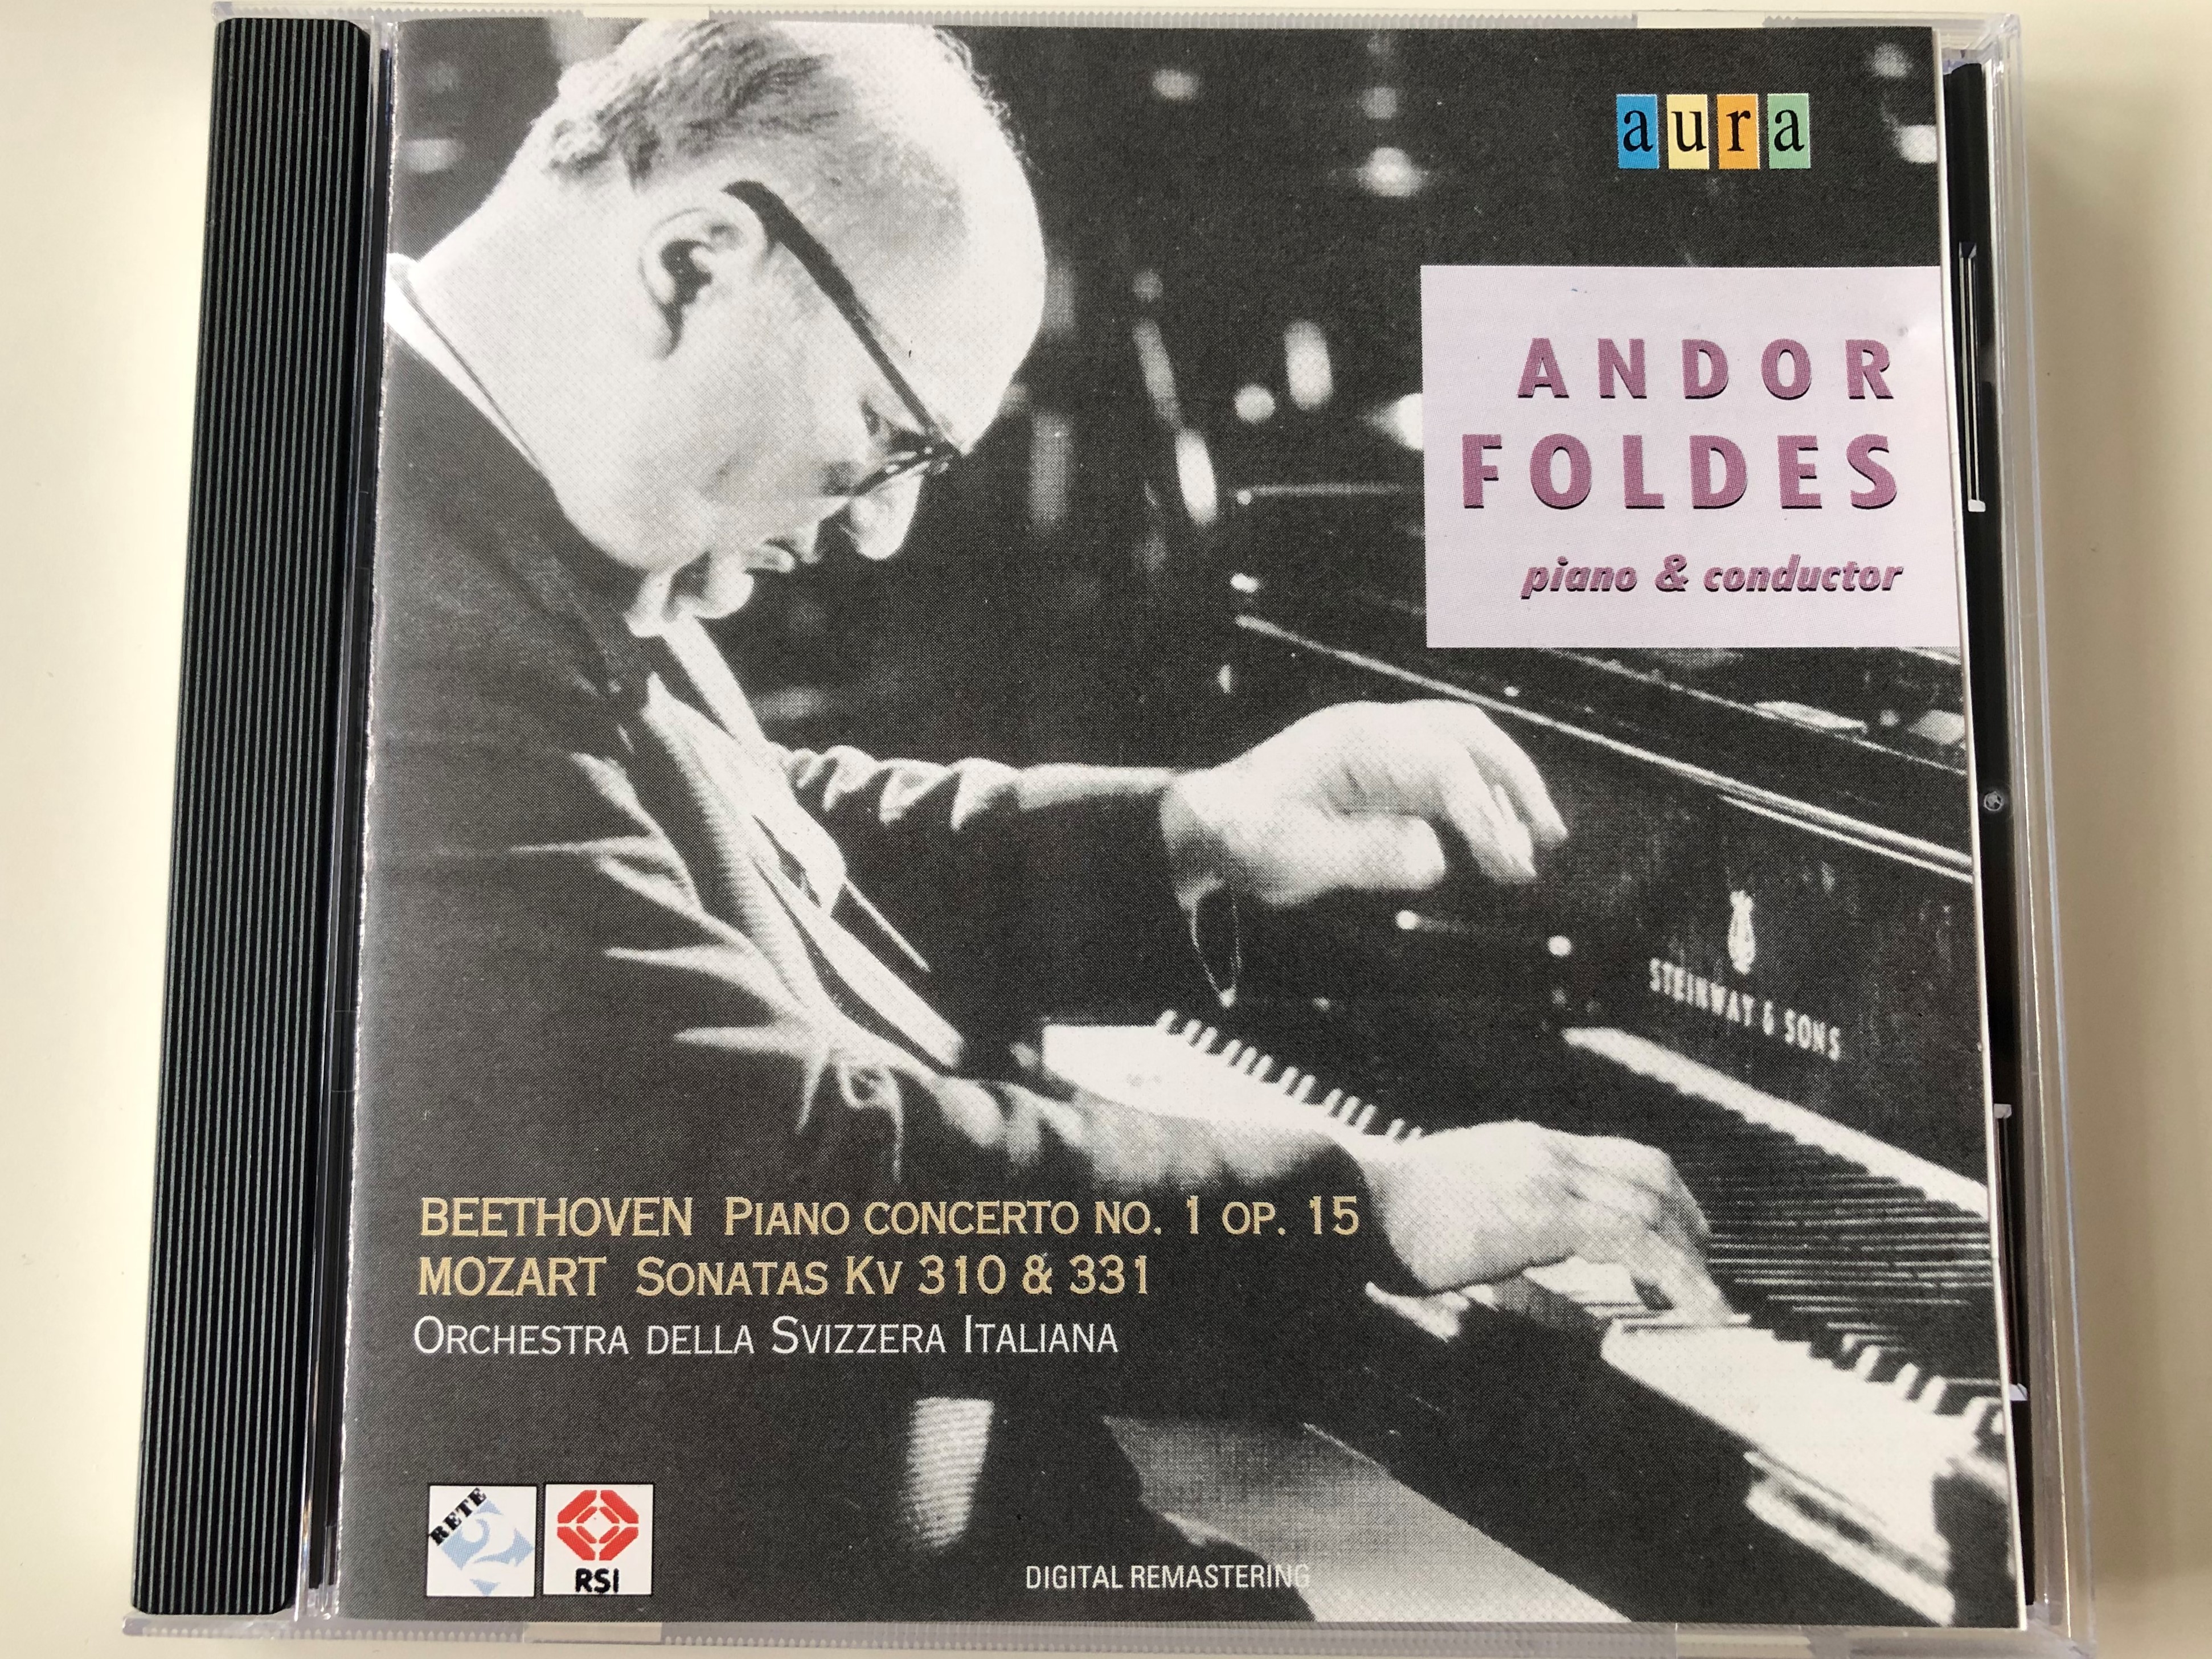 andor-foldes-piano-conductor-beethoven-piano-concerto-no.-1-op.-15-mozart-sonatas-kv-310-331-orchestra-della-svizzera-italiana-aura-music-audio-cd-1999-aur-209-2-add-1-.jpg